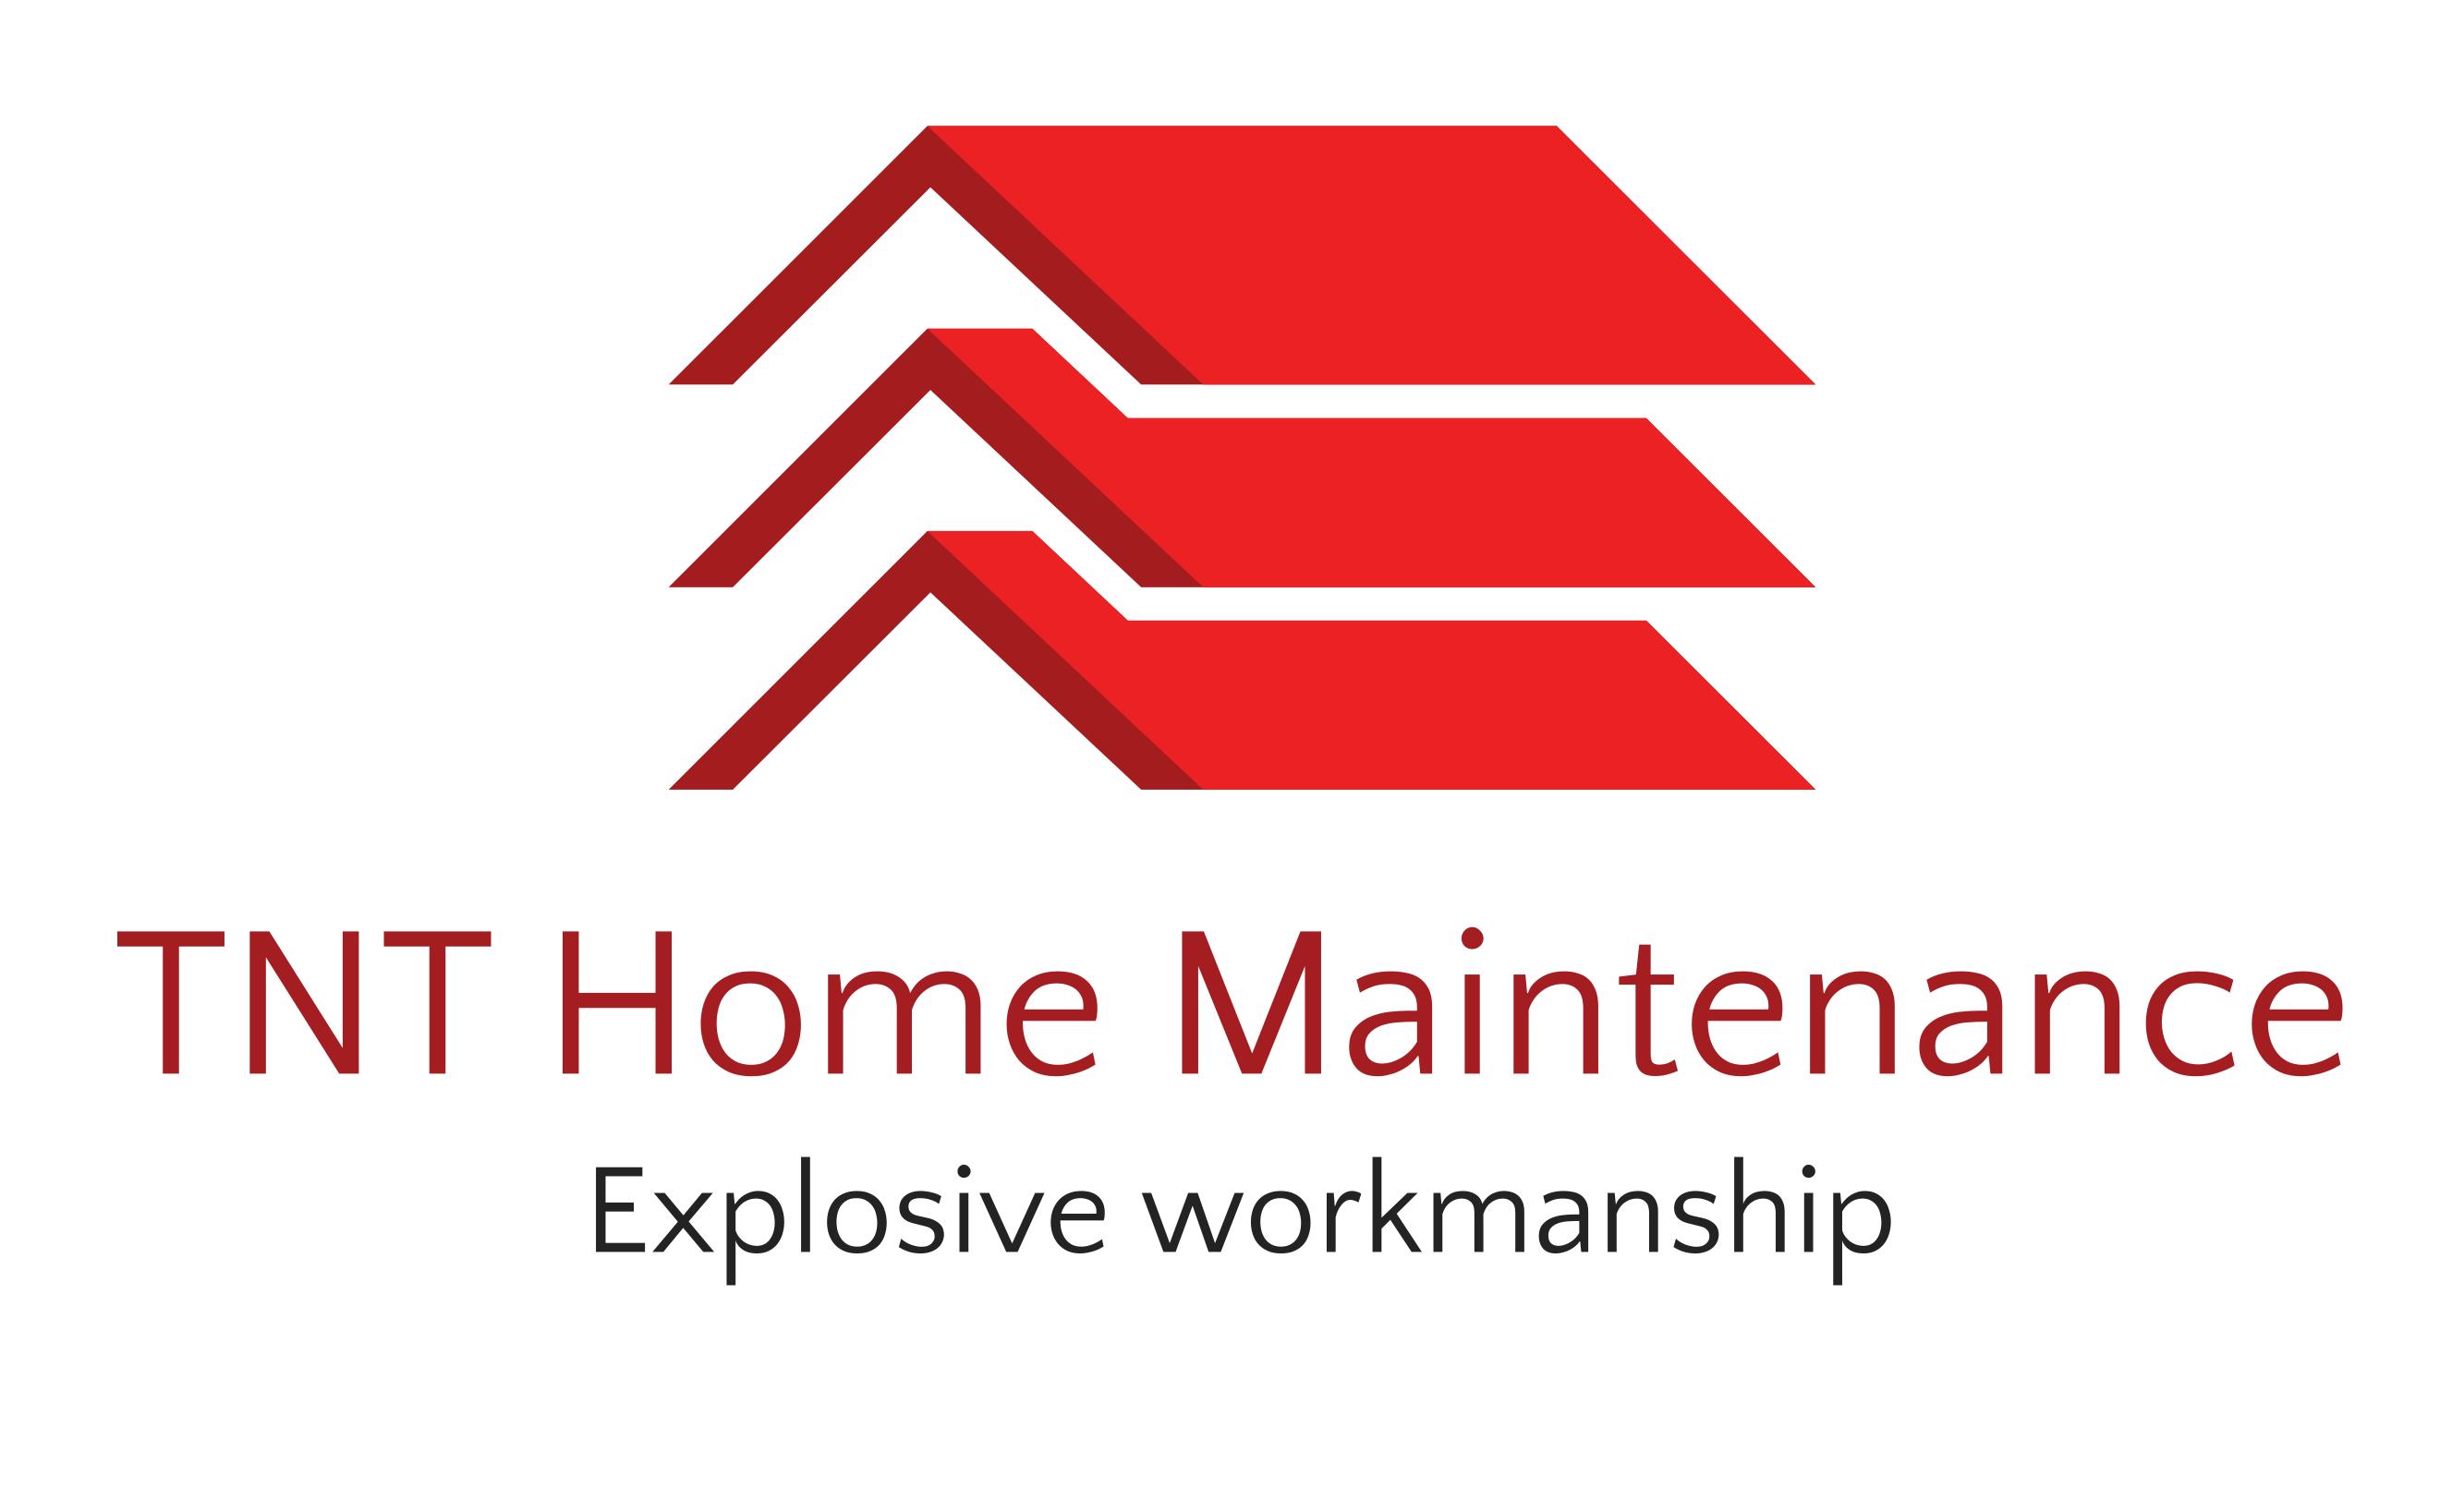 TNT Home Maintenance